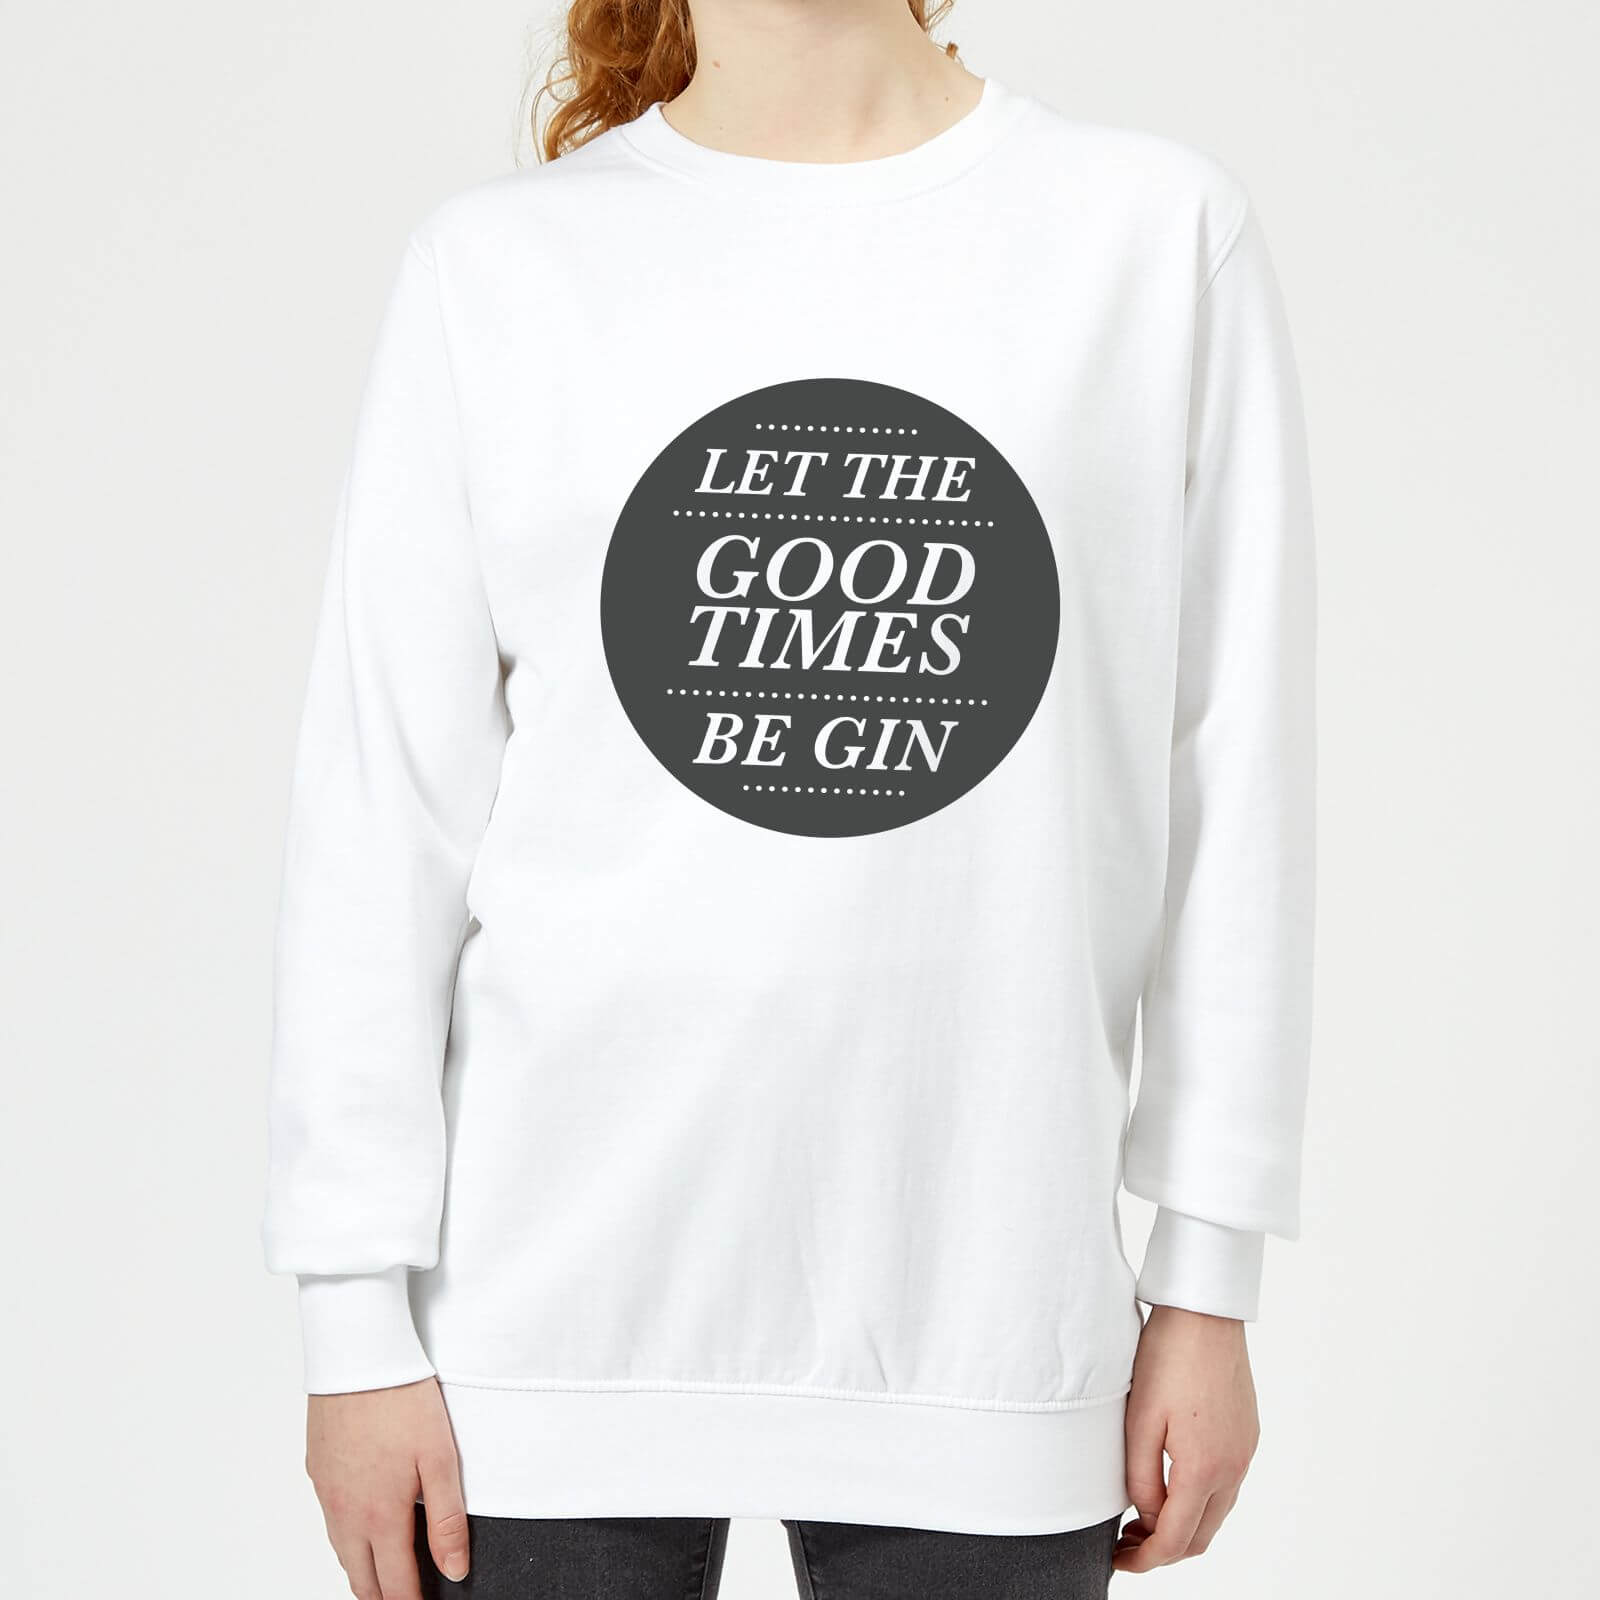 Let the Good Times Be Gin Women's Sweatshirt - White - L - White